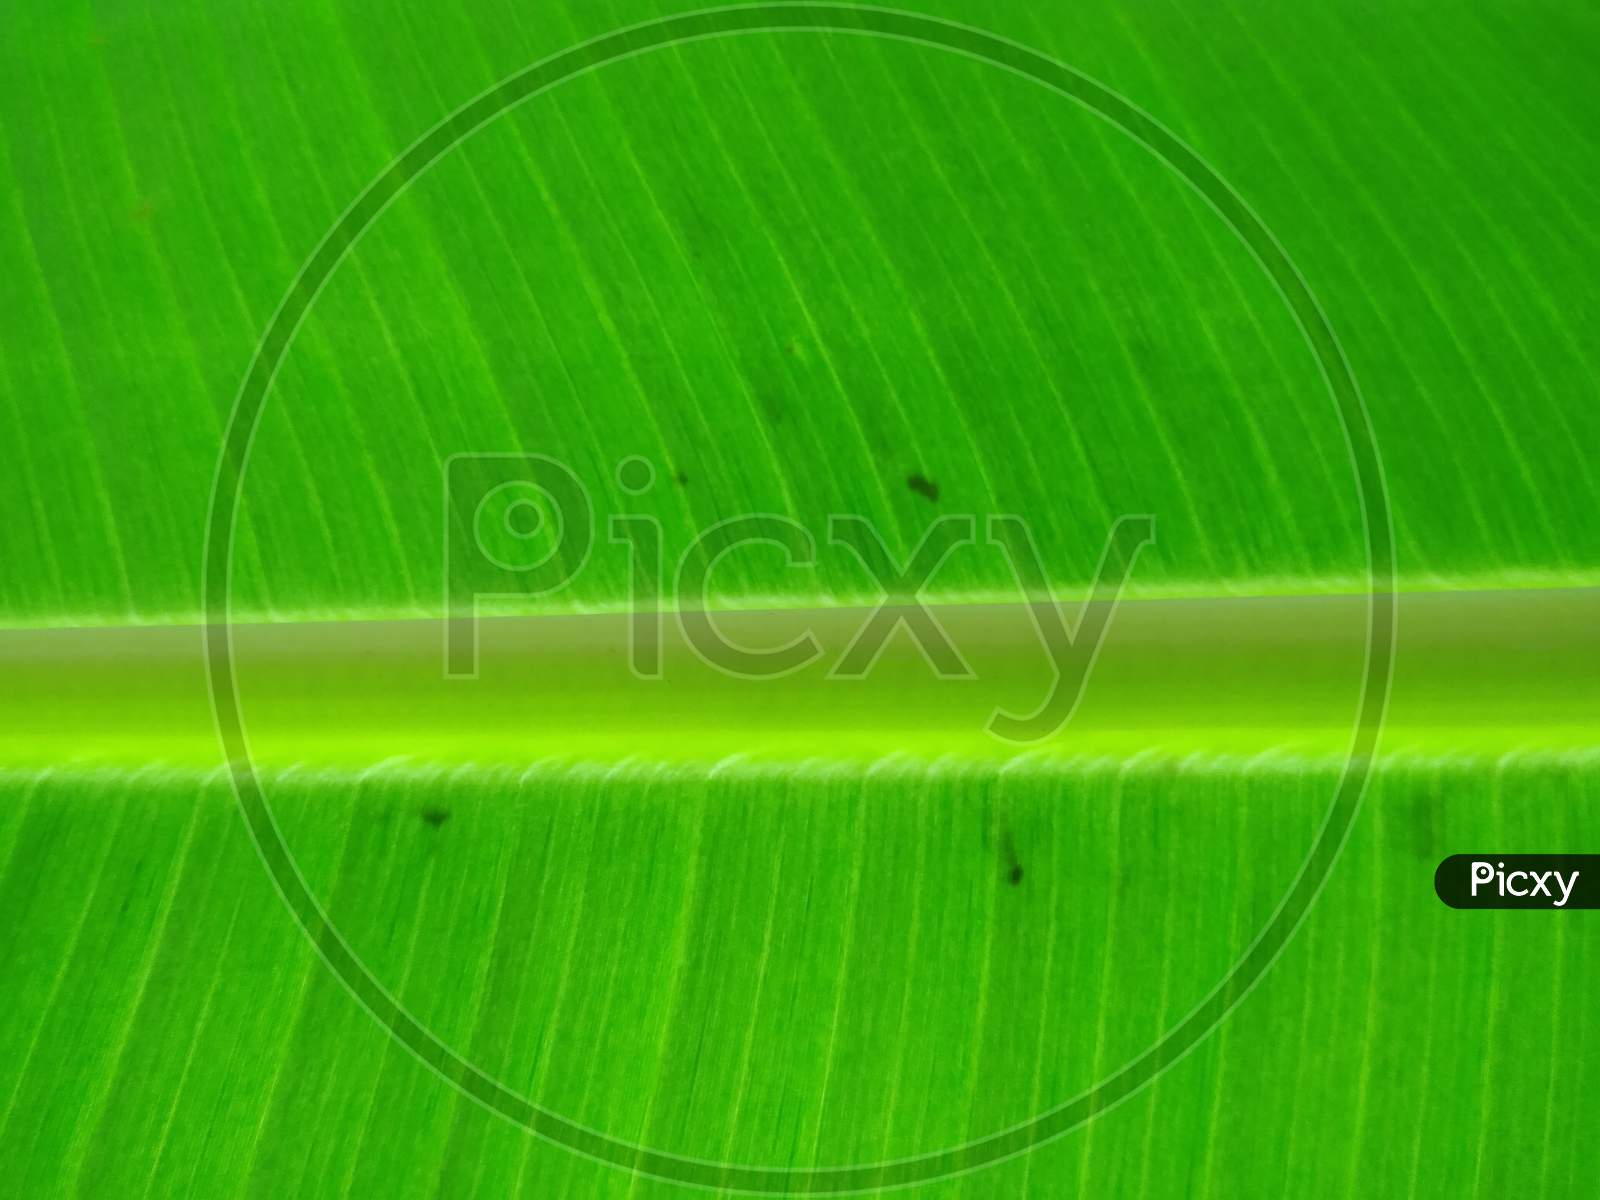 Banana leaf, wallpaper